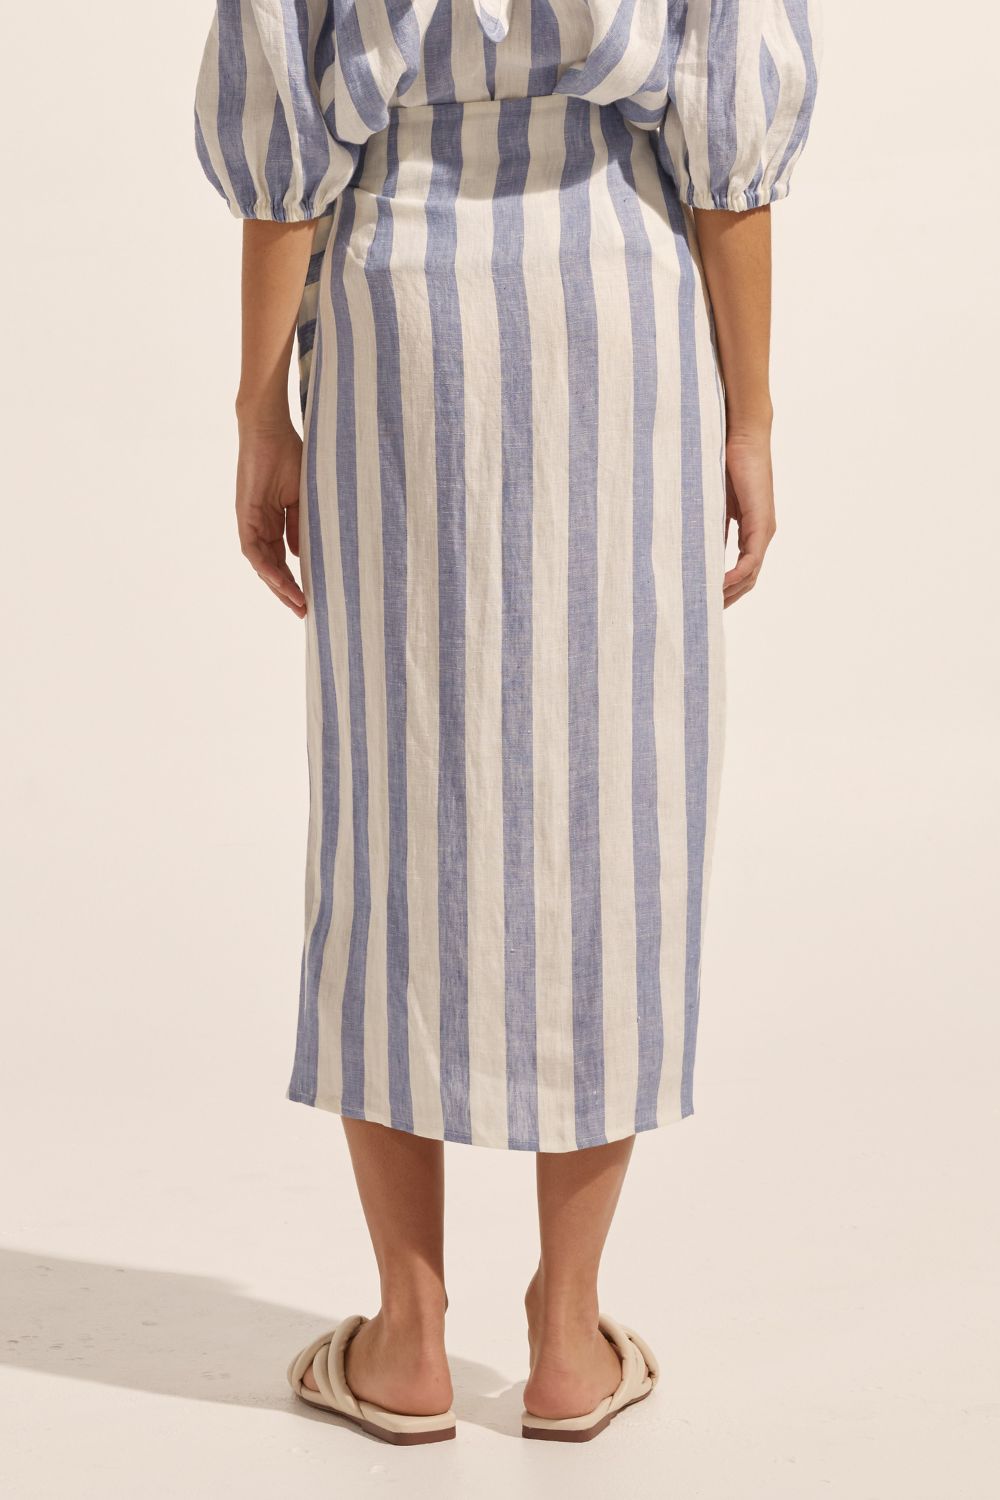 blue and white stripe, midi skirt, side tie, skirt, back view